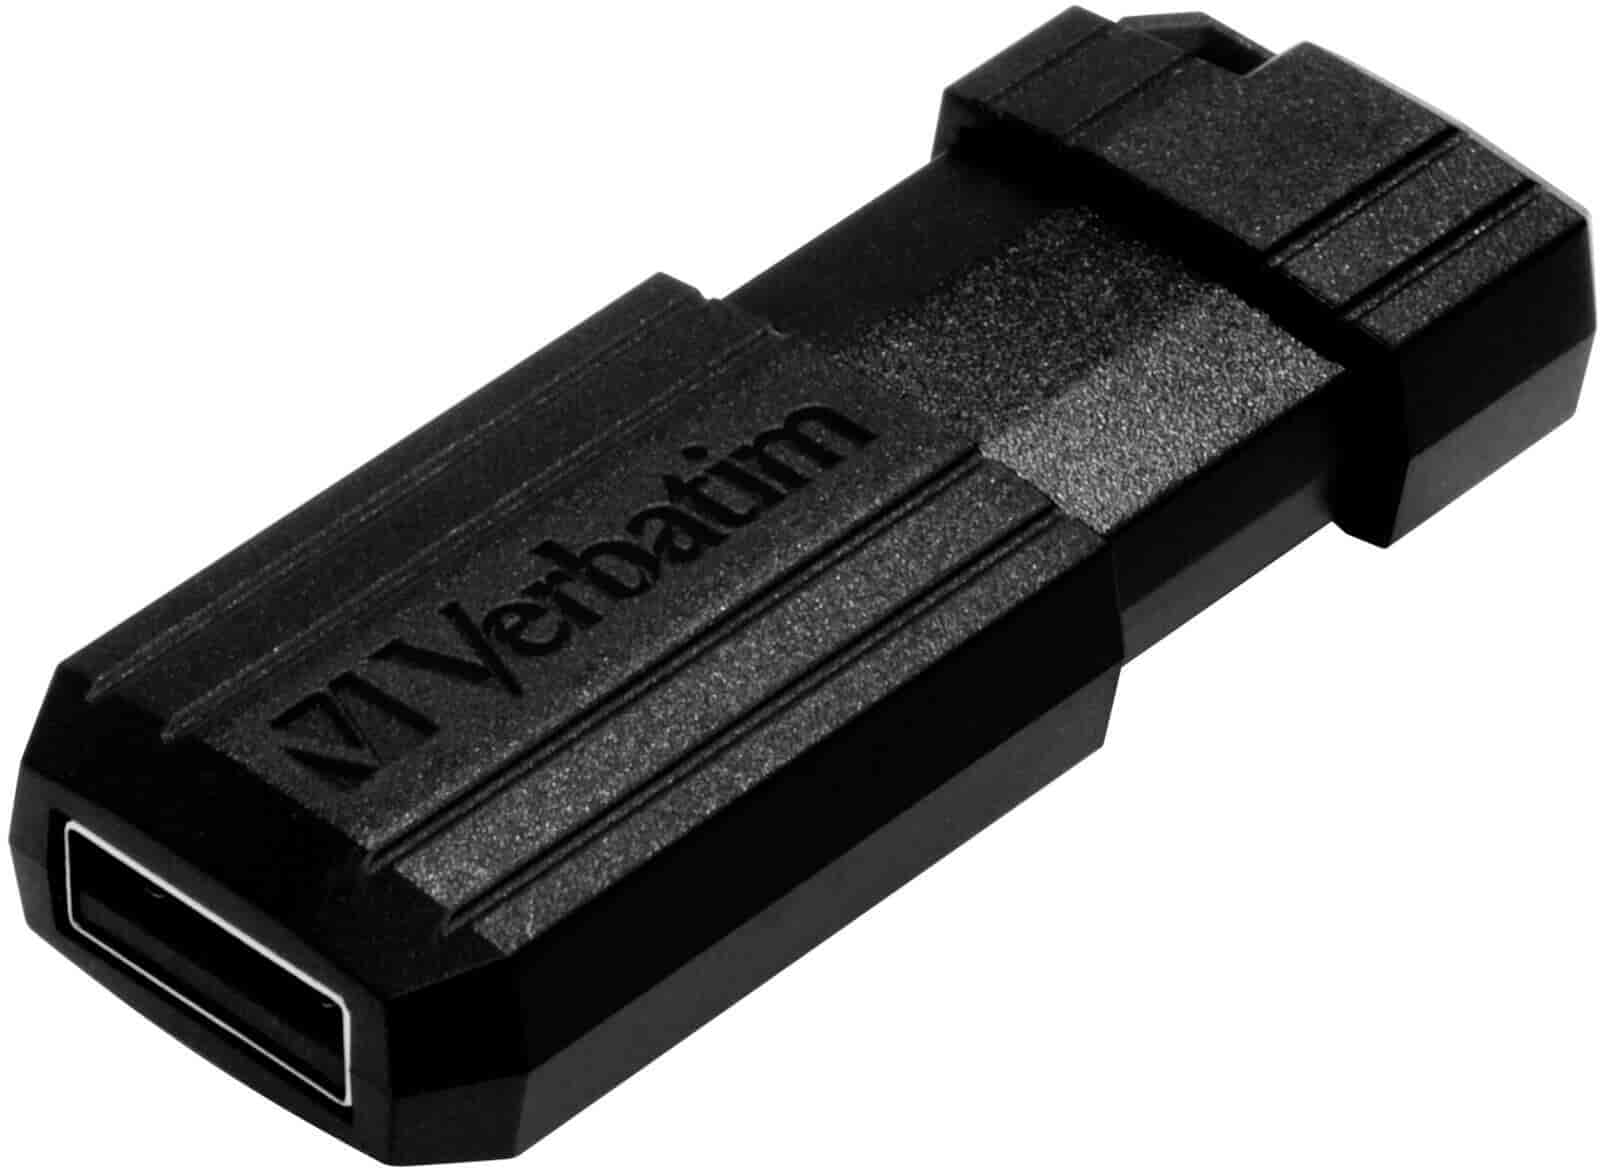 32 GB USB memory stick, Verbatim Hi-Speed Store'N'Go PinStribe